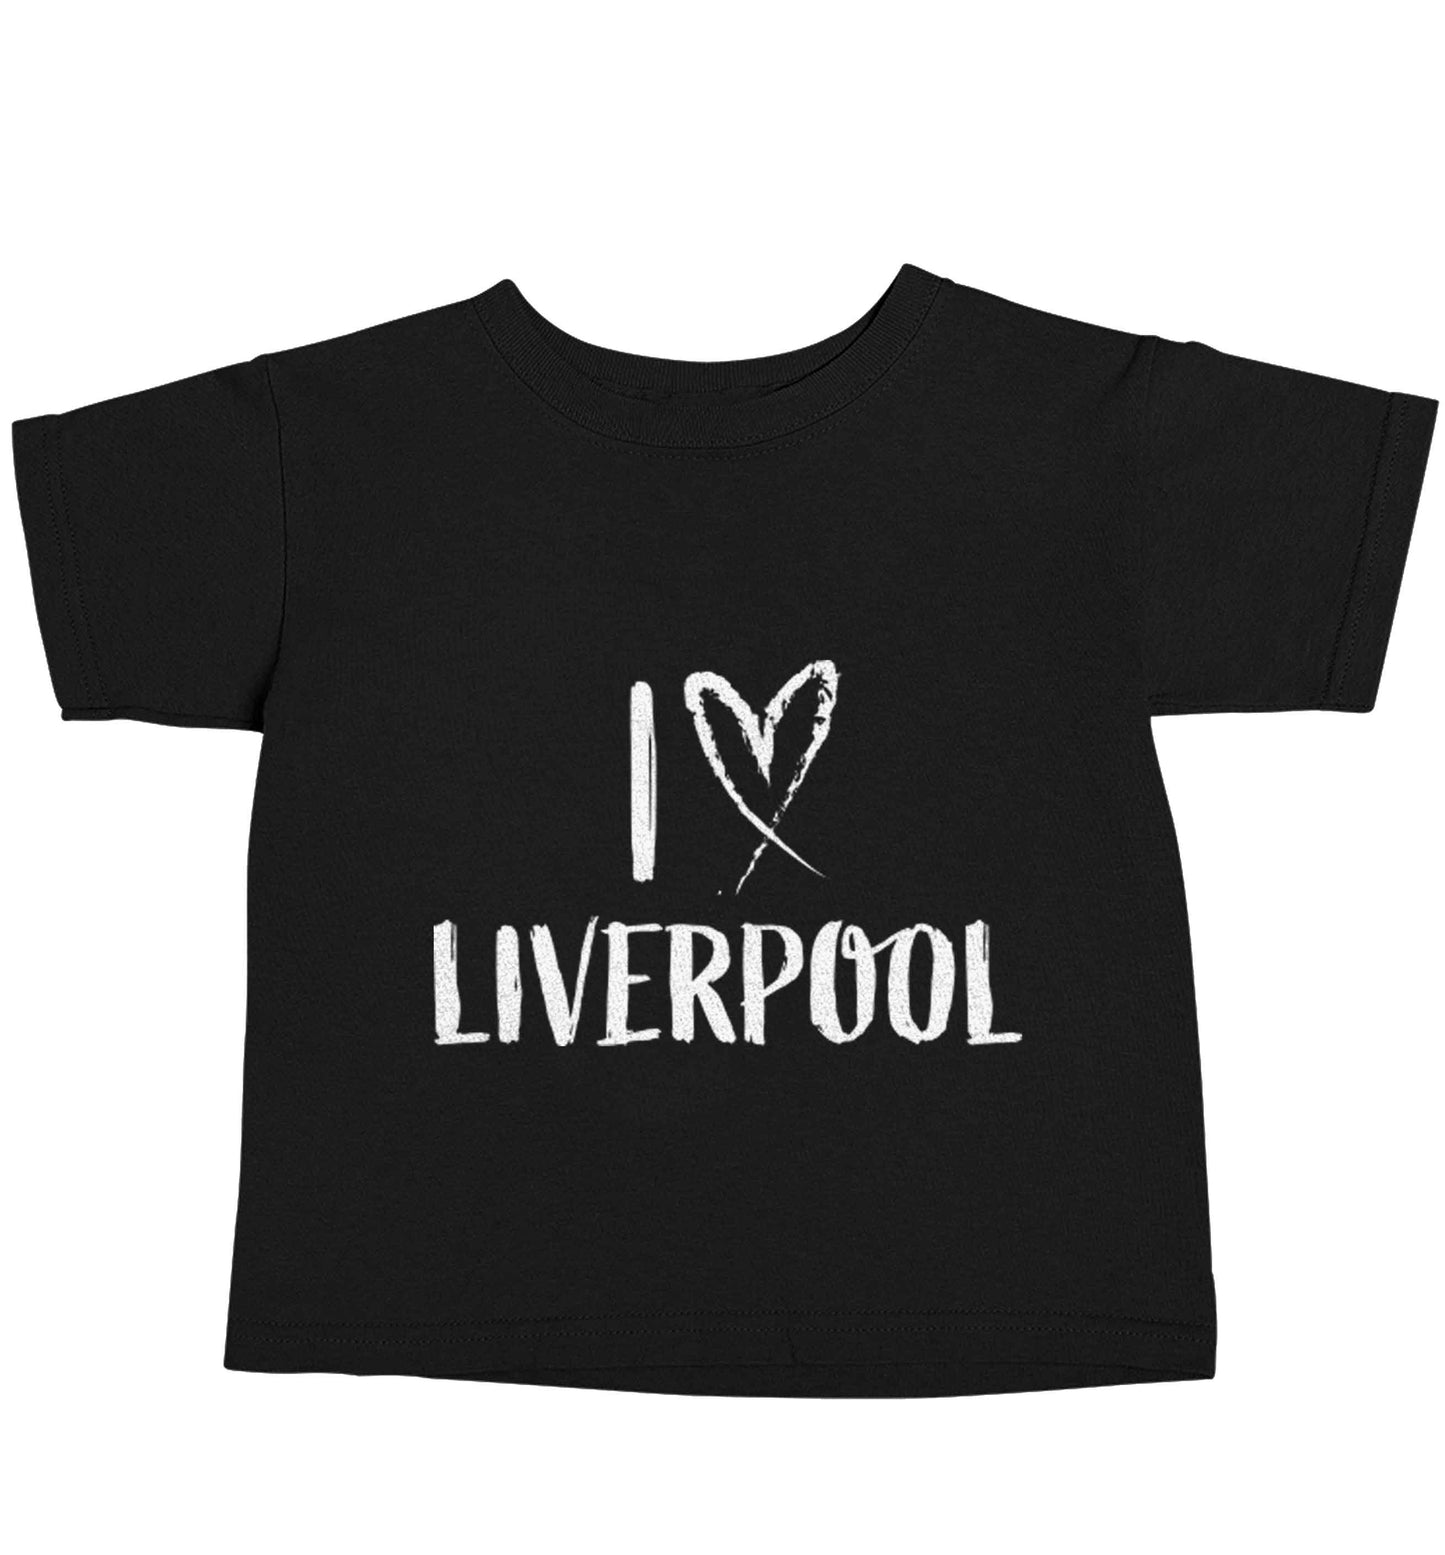 I love Liverpool Black baby toddler Tshirt 2 years